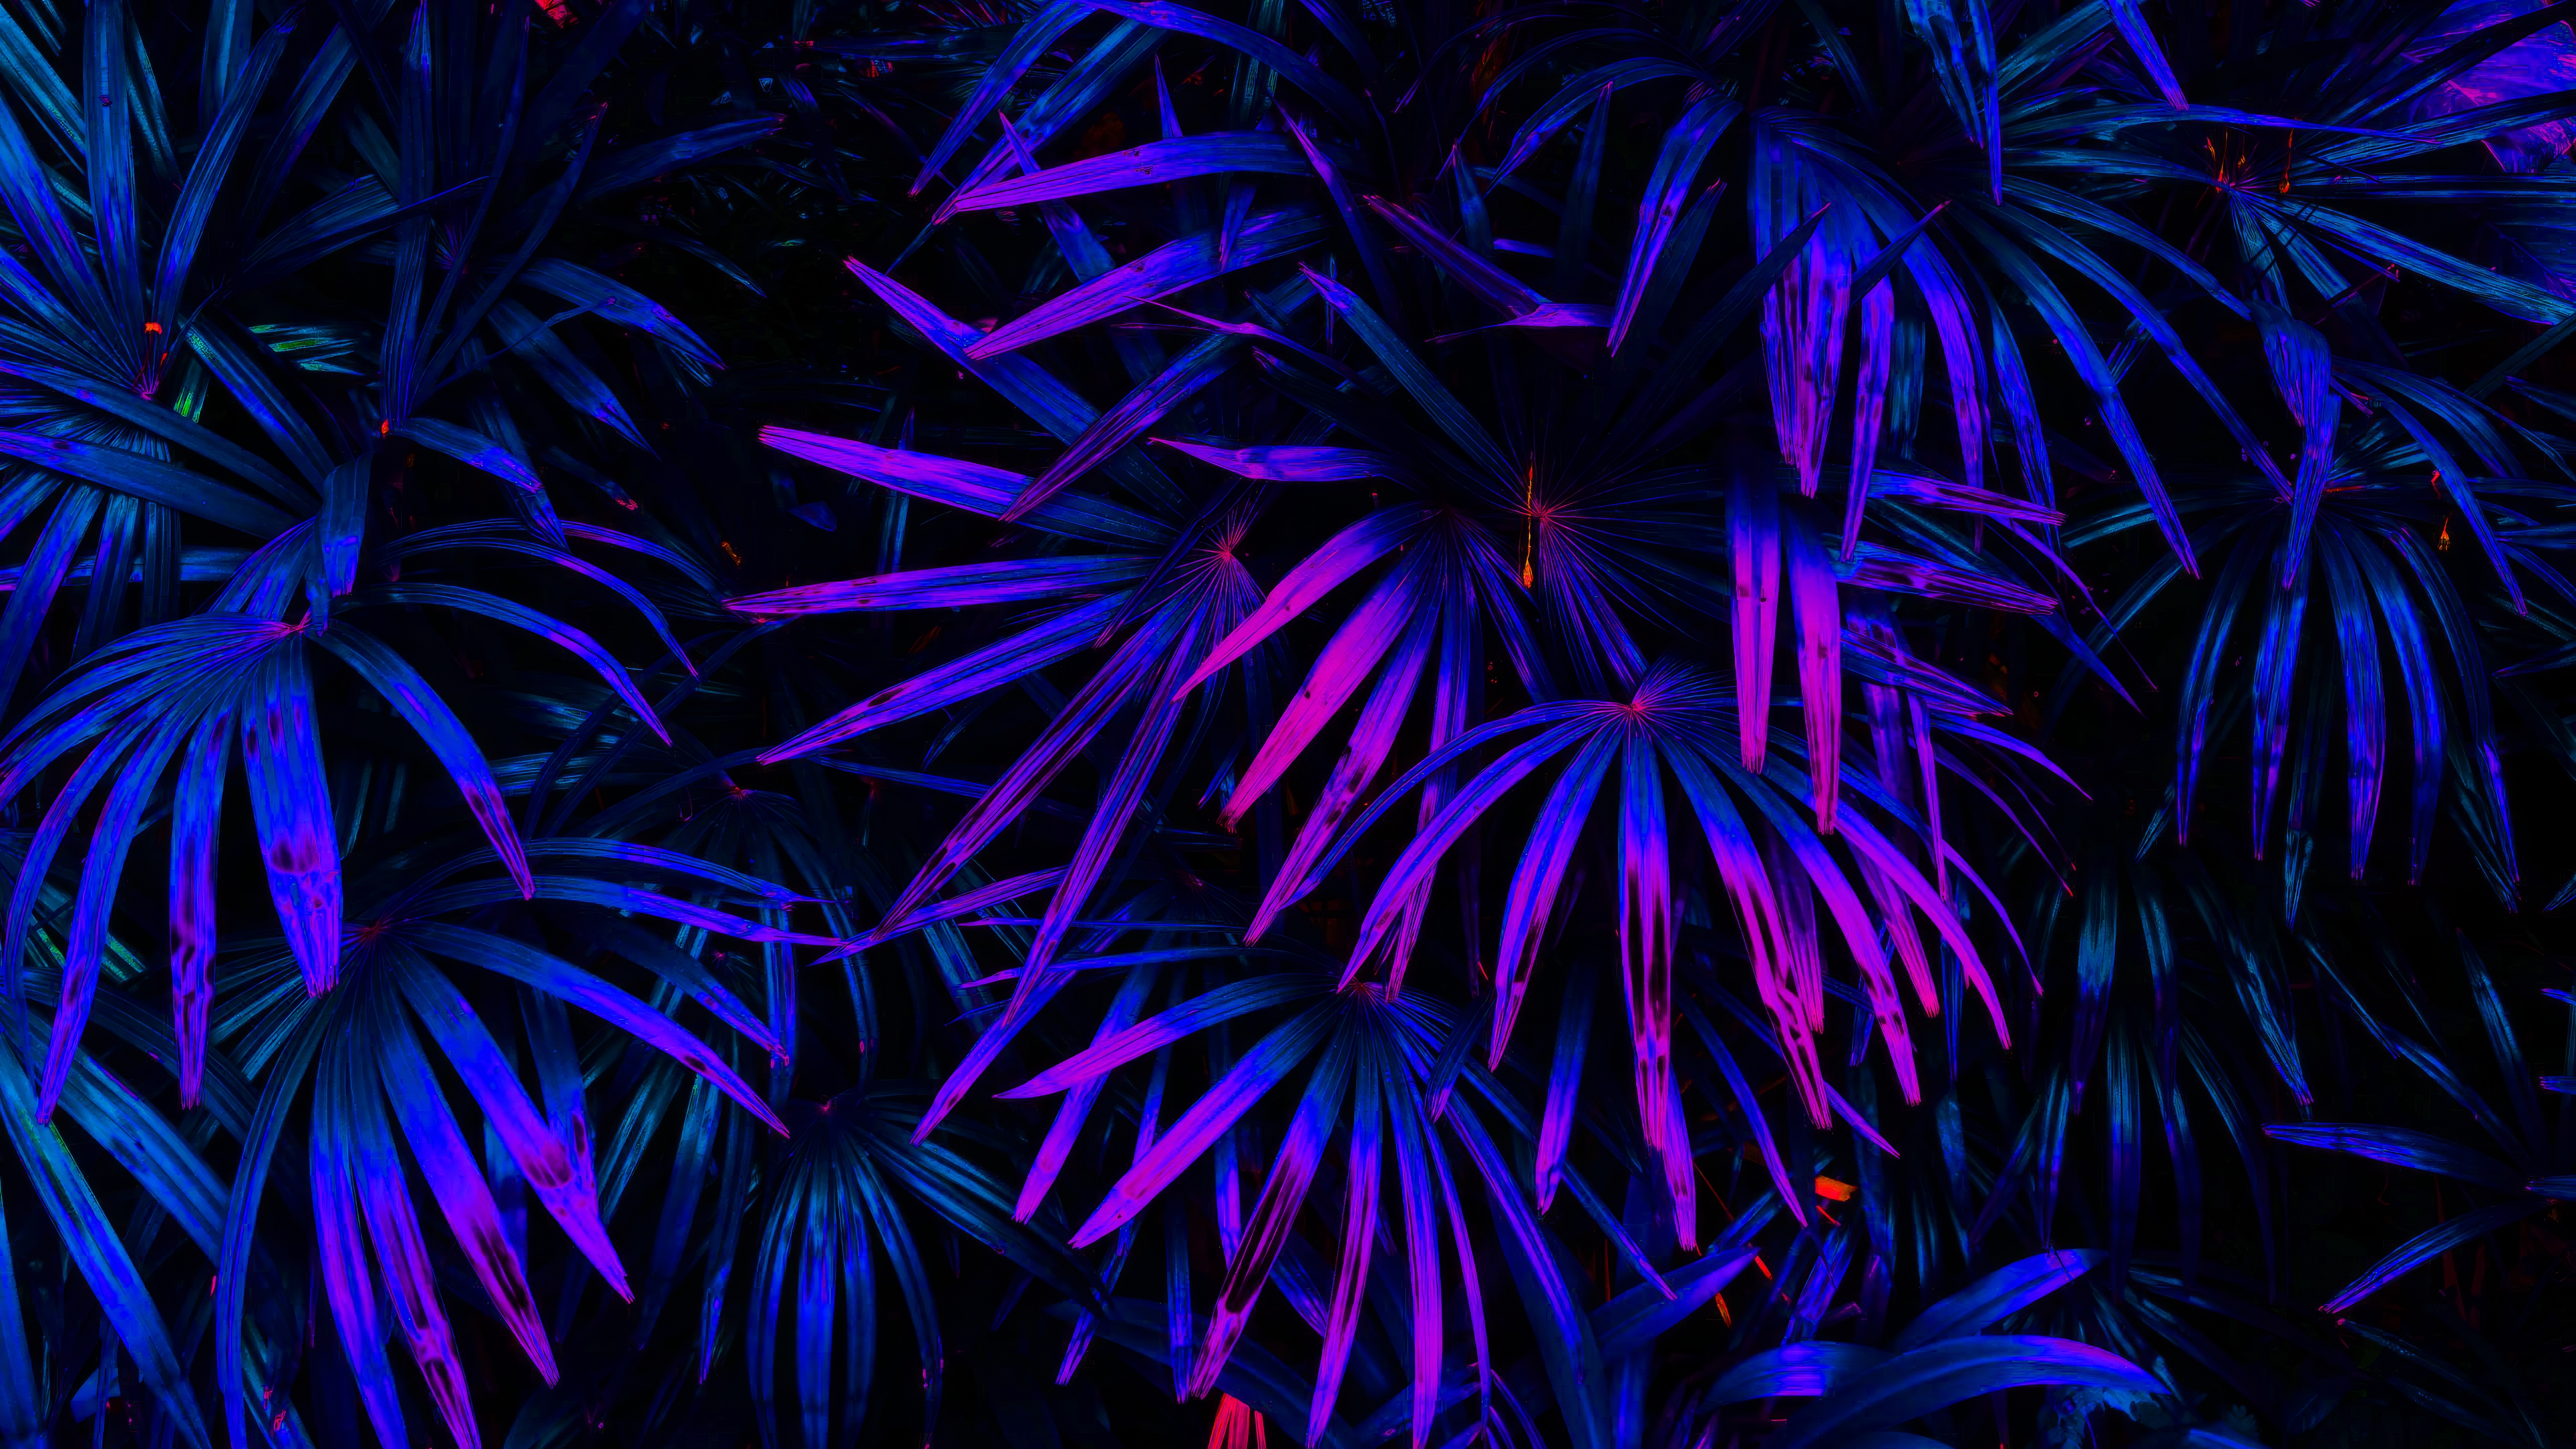 Neon Ferns Blue Pink Digital Art 5120x2880